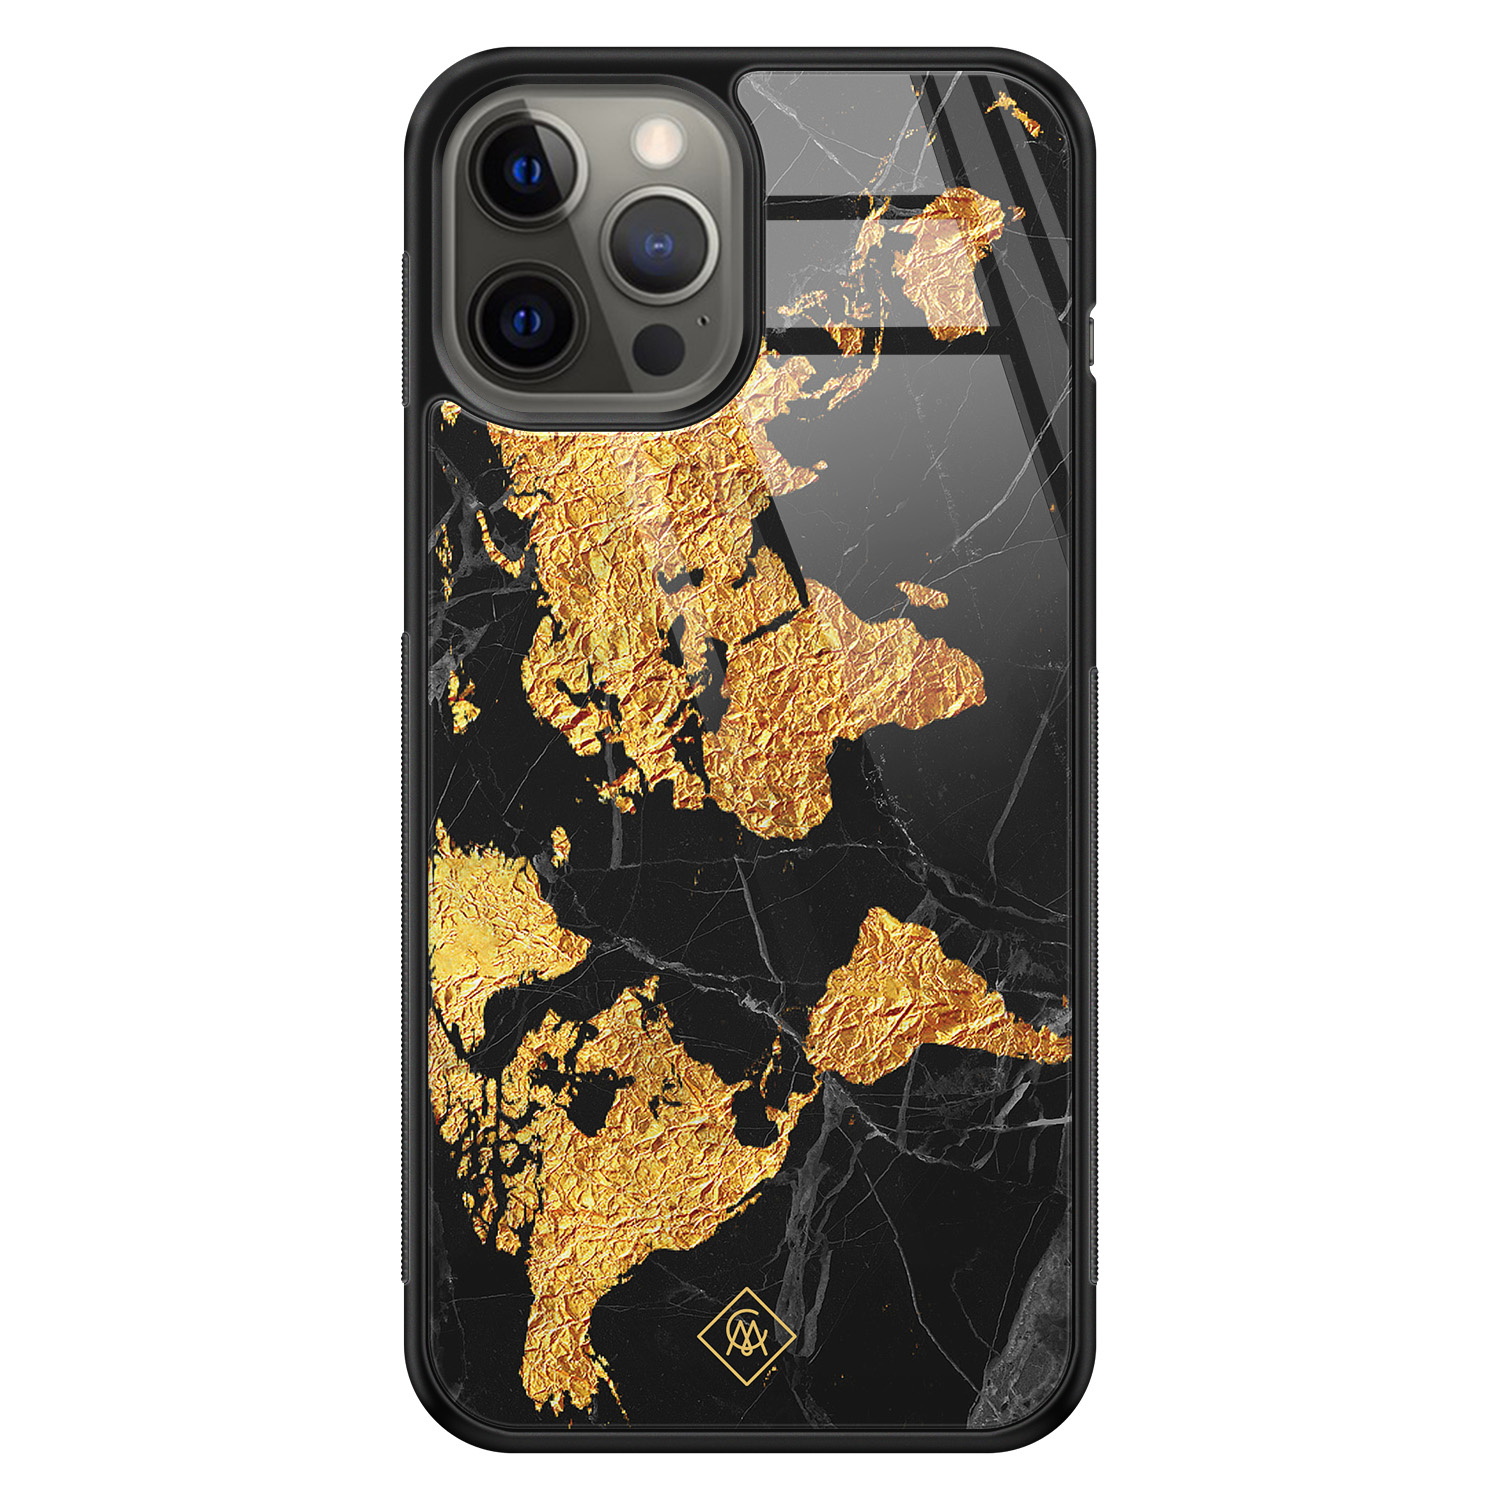 vis minimum Verleiden iPhone 12 Pro Max glazen hardcase - Wereldkaart - Casimoda.nl